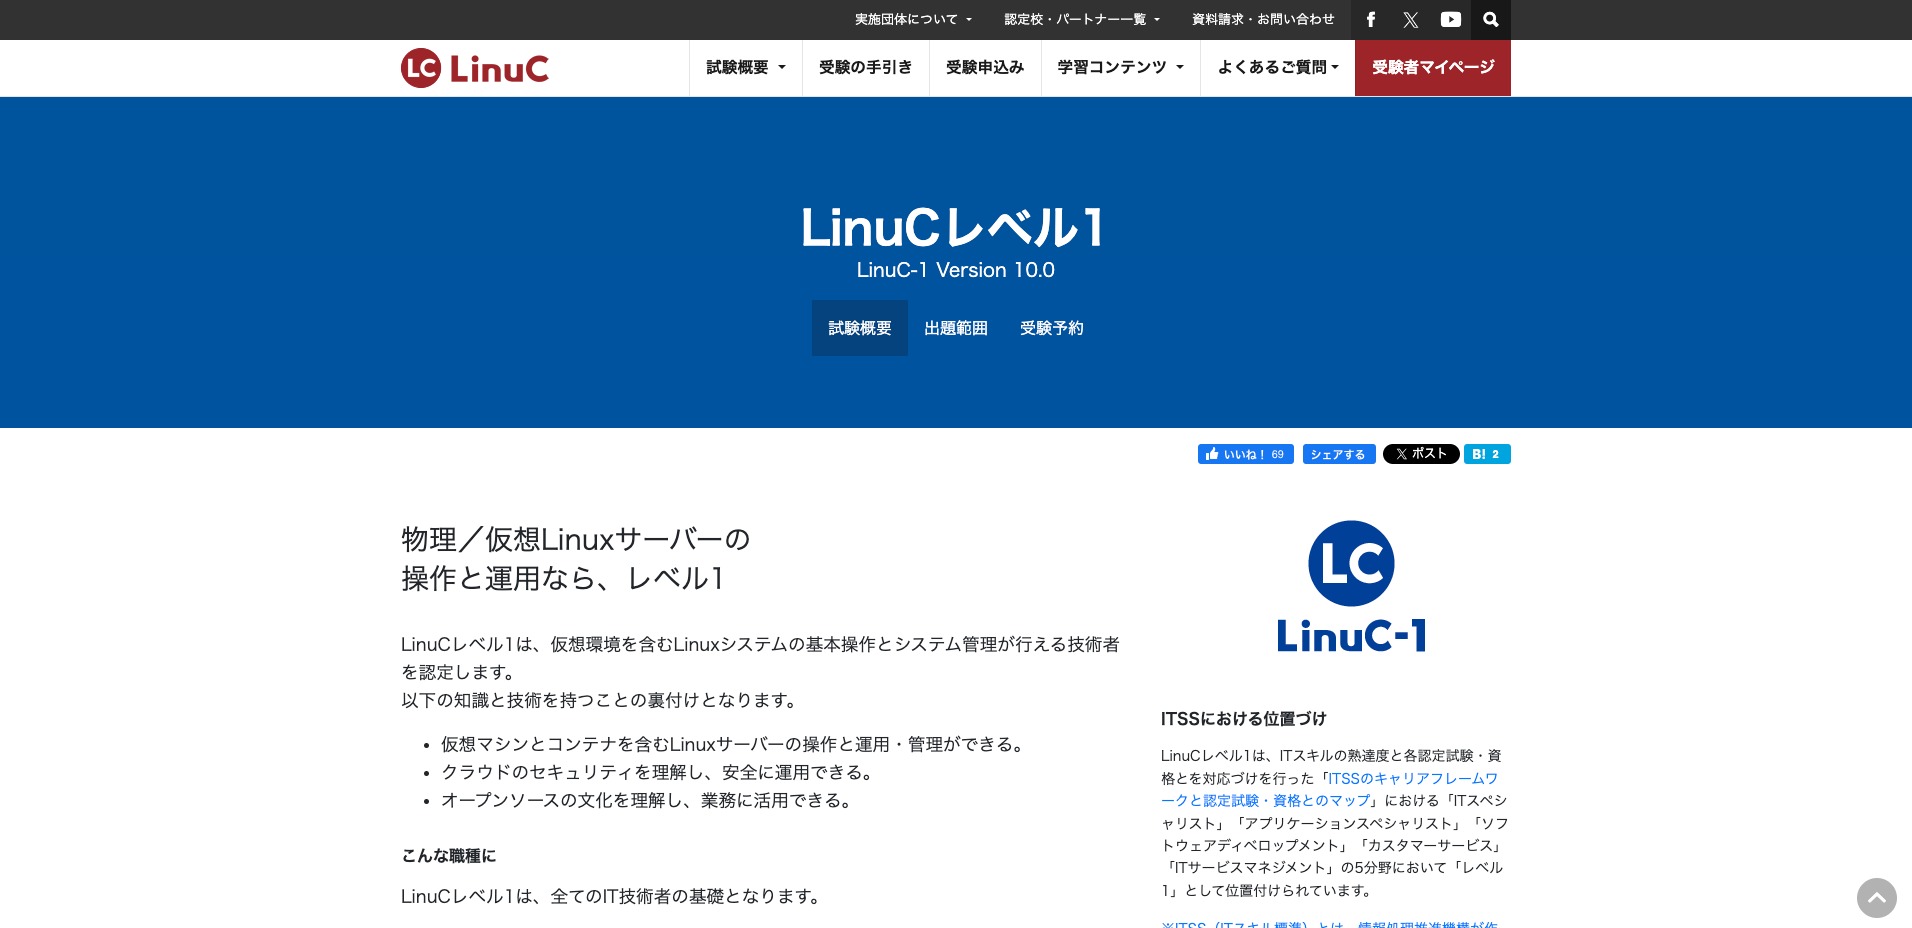 Linux技術者認定試験 LinuC レベル1公式サイト